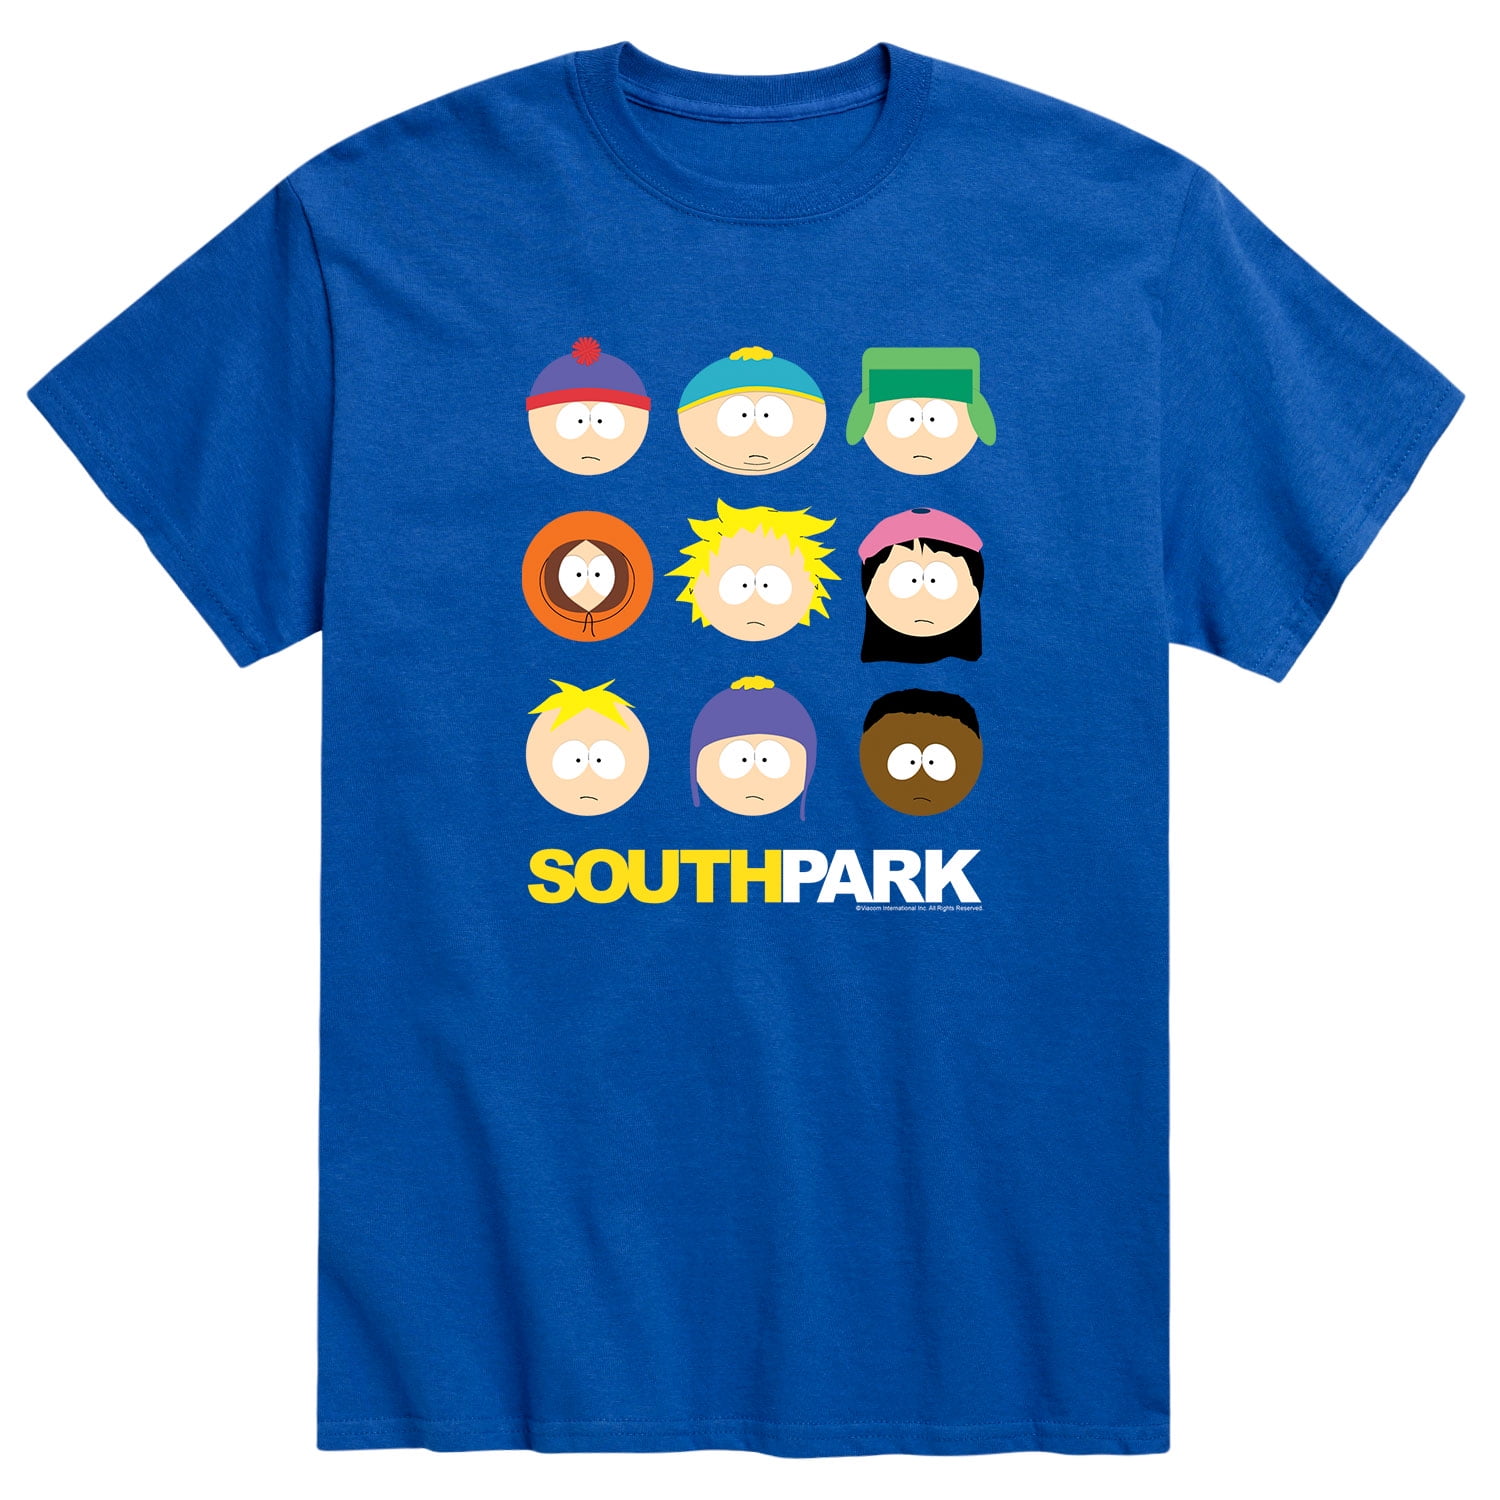 South Park - South Park Characters - Men's Short Sleeve Graphic T